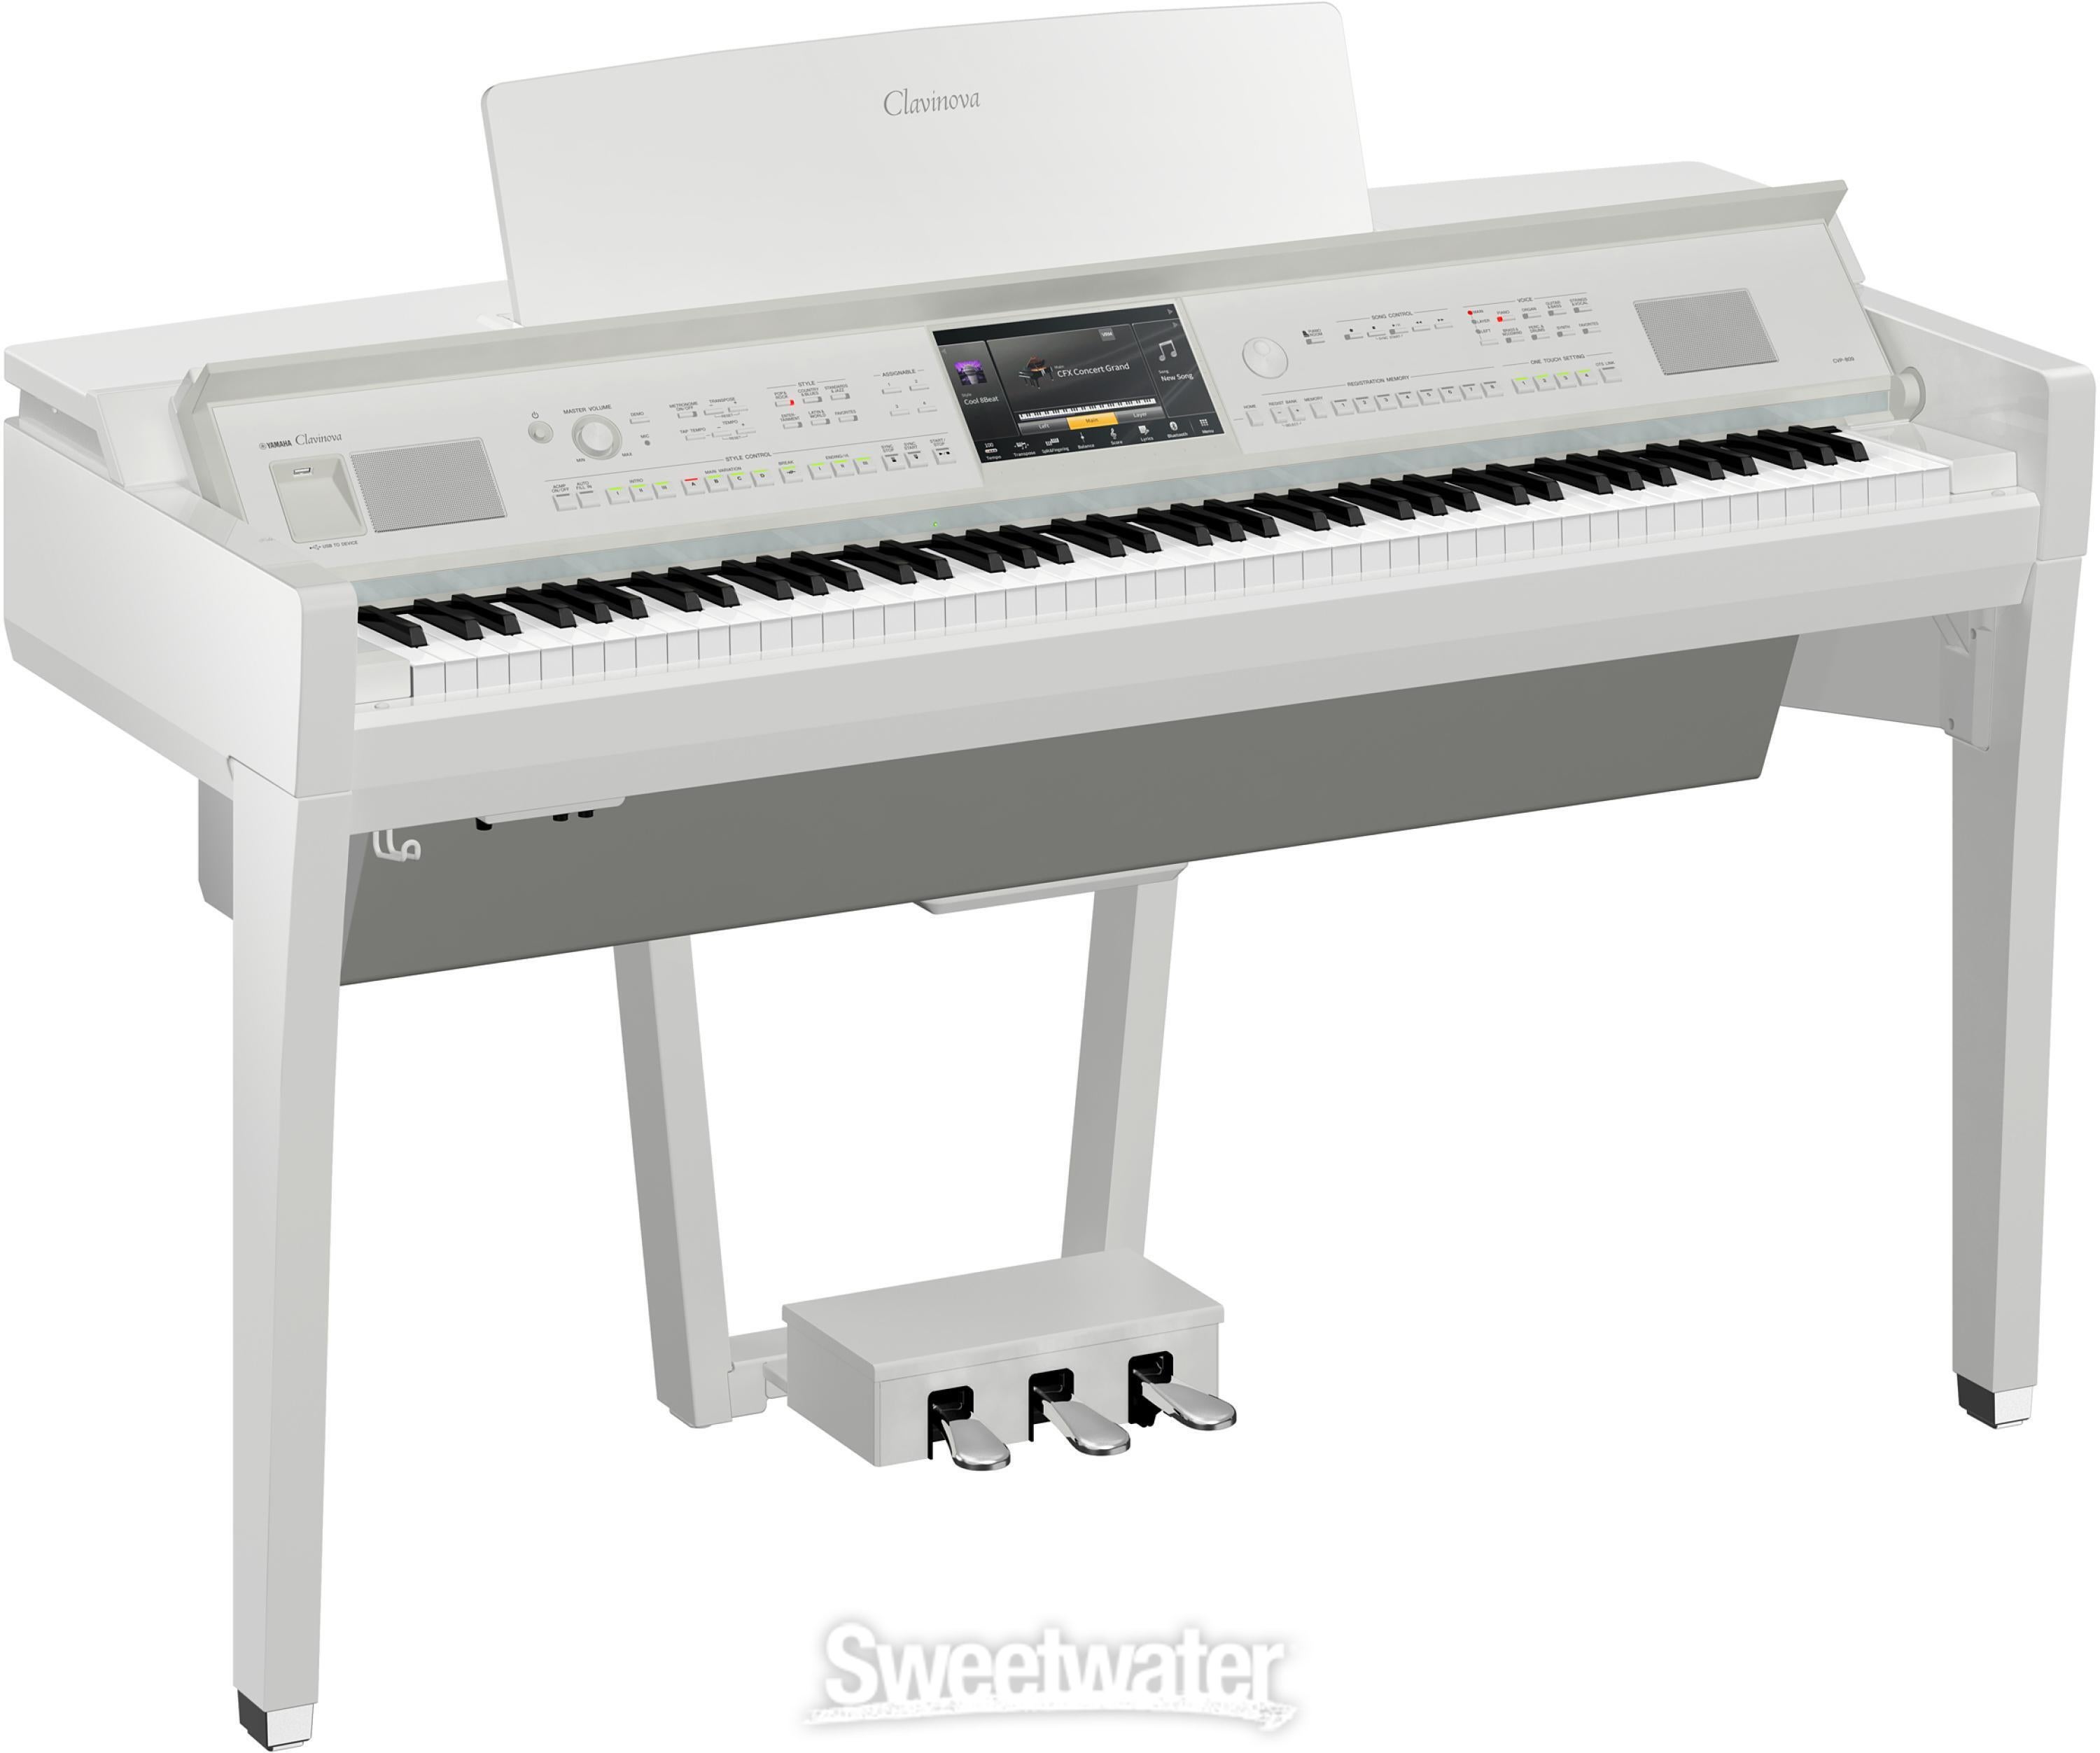 YAMAHA Clavinova CVP-30 電子ピアノと椅子のセット - 鍵盤楽器、ピアノ